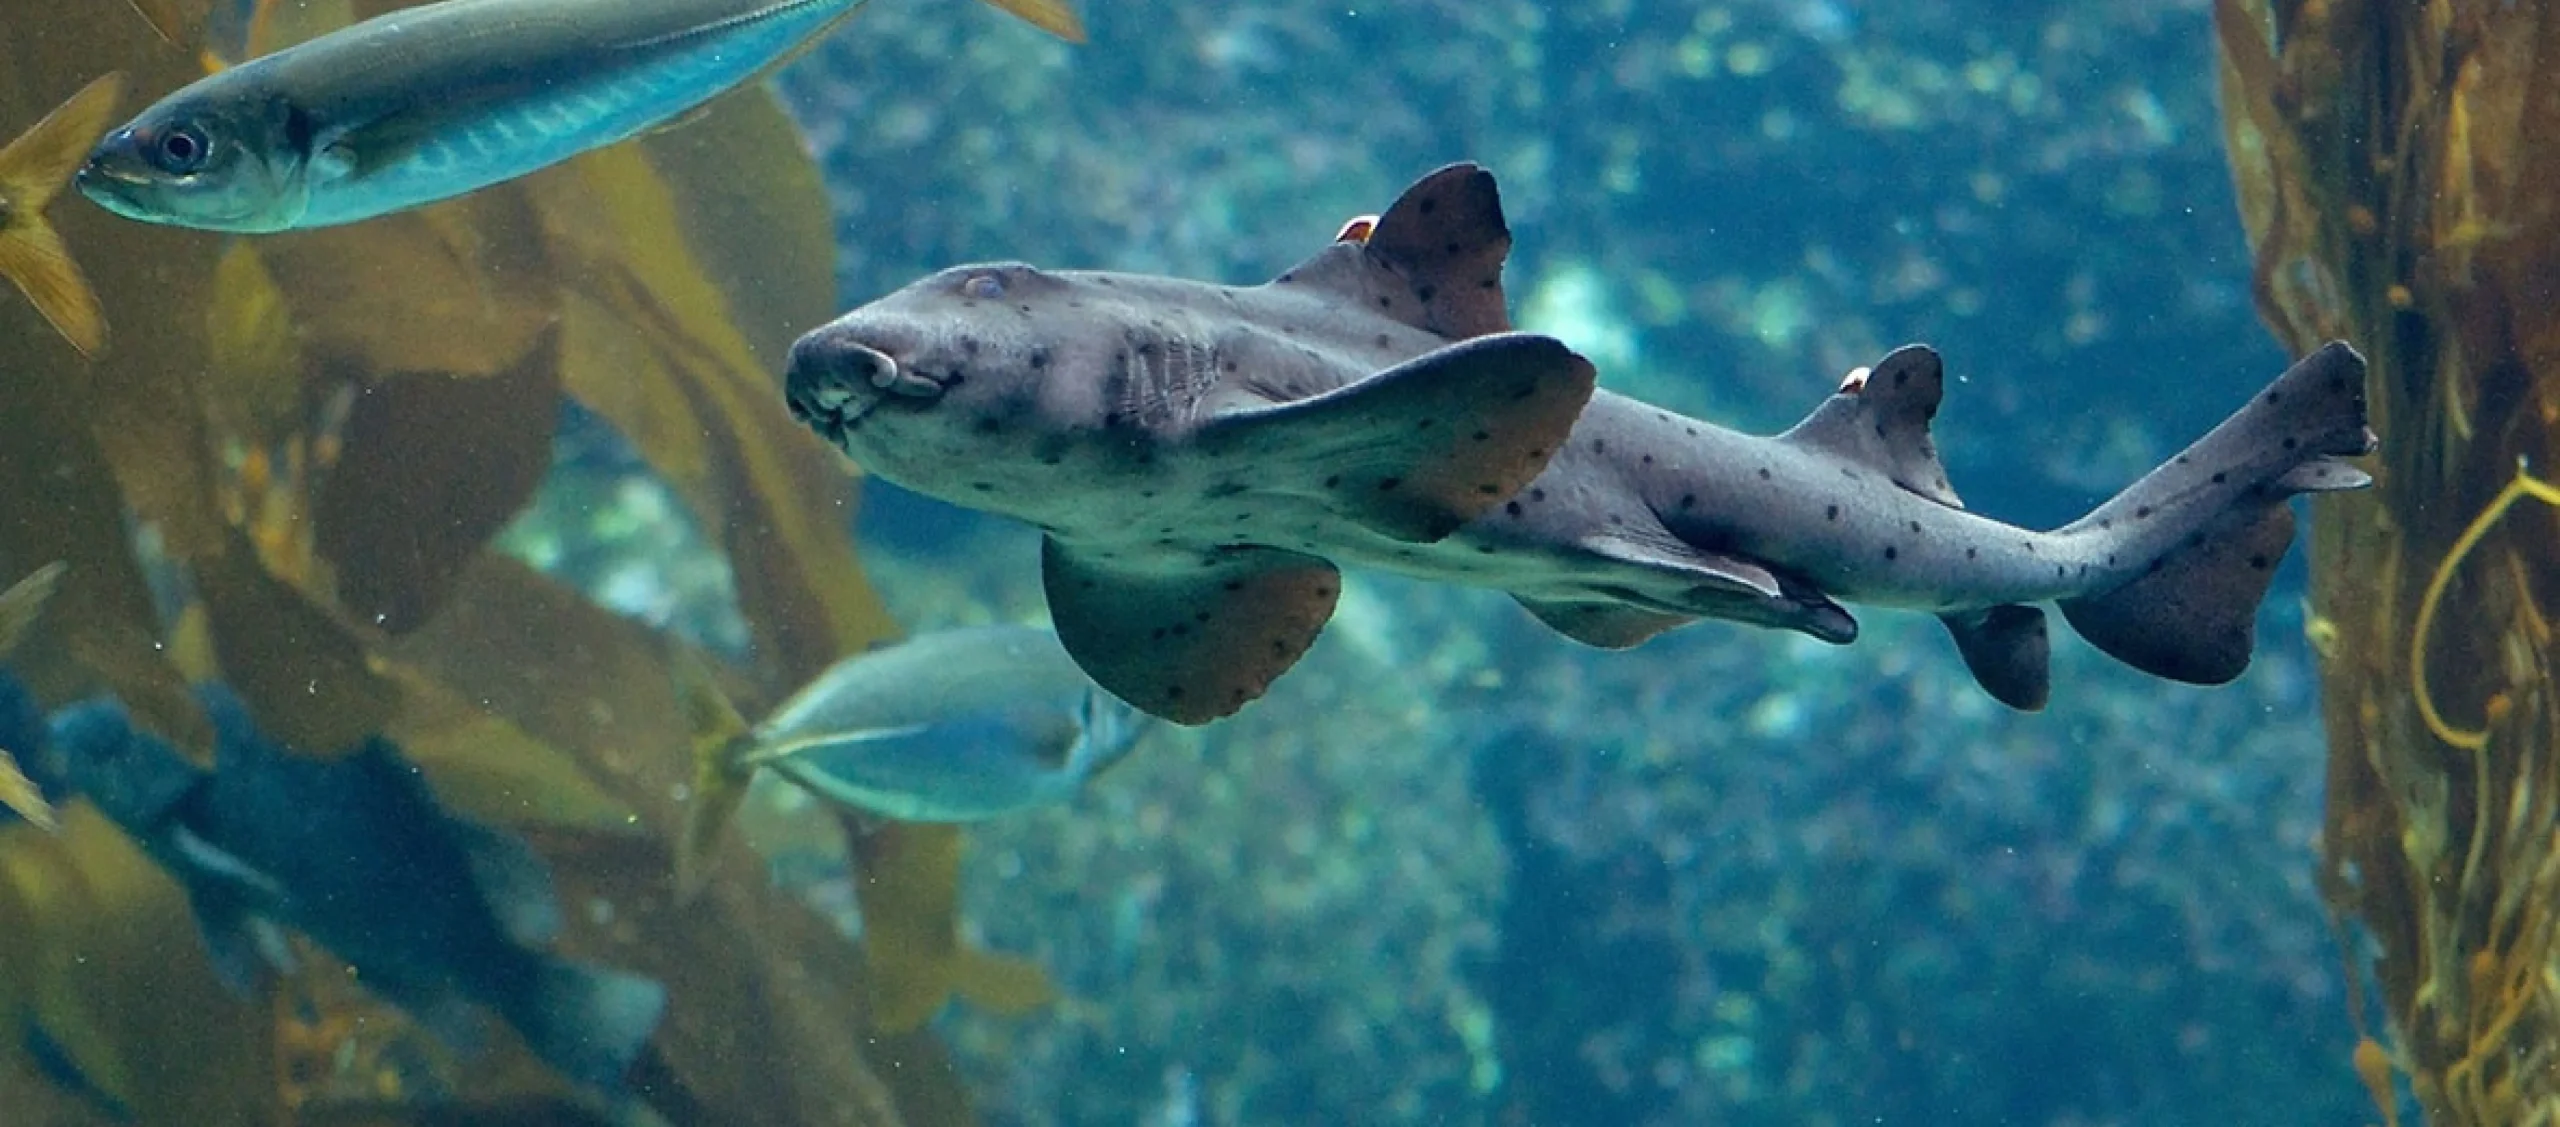 Small Shark In Aquarium